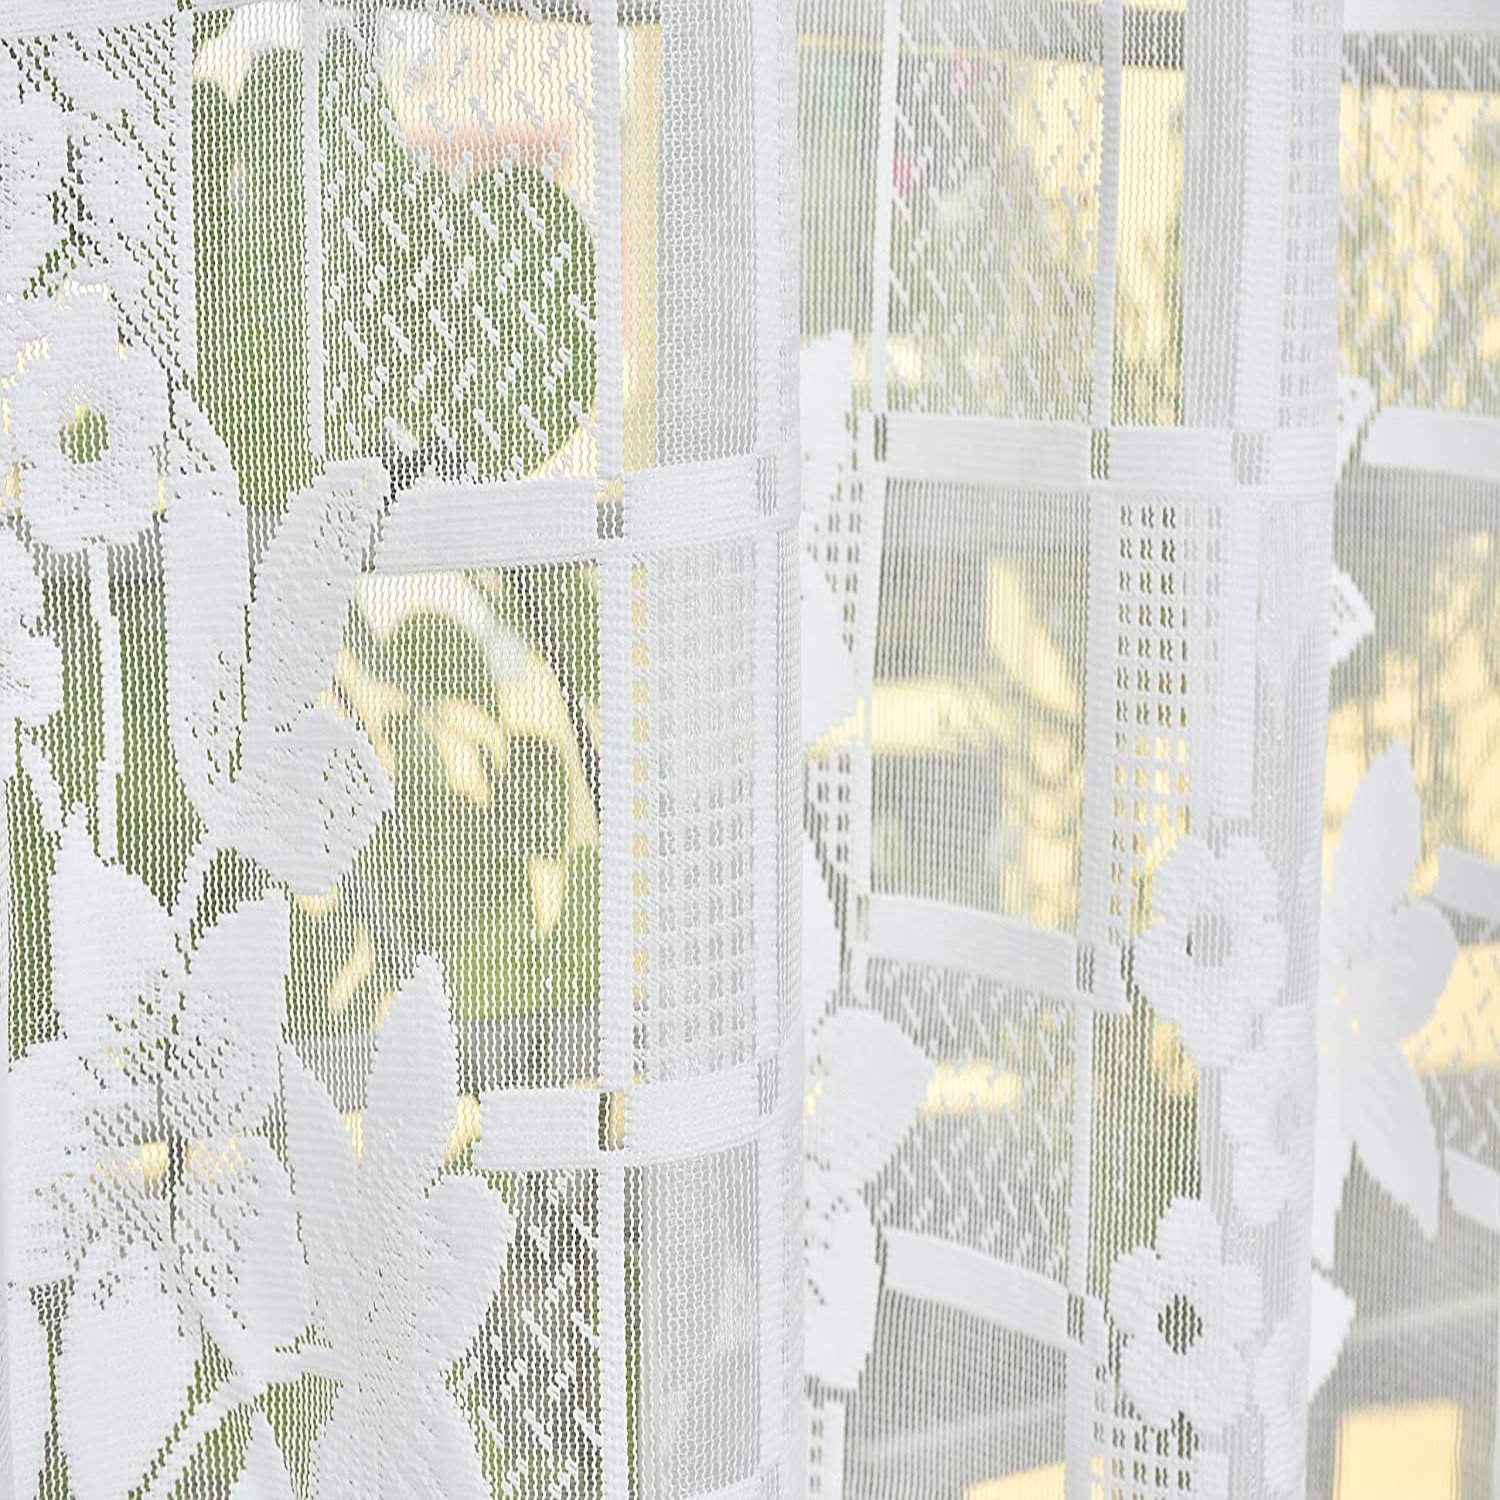 Kuber Industries Flower Print Home Décor Cotton Door Curtain With 8 Eyeletss, 7 Feet (White)